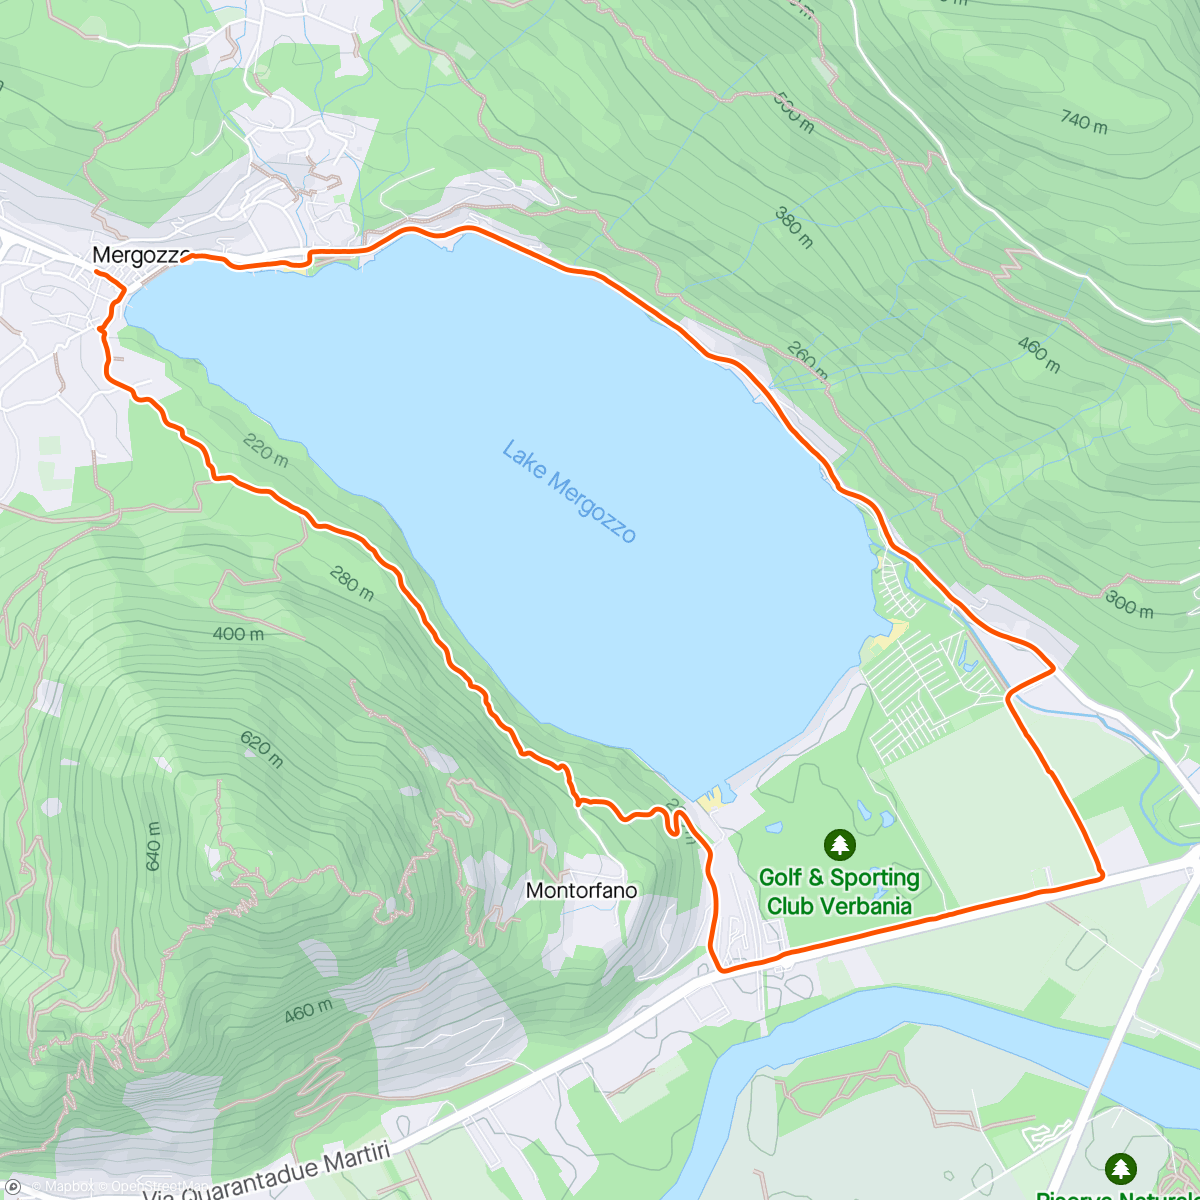 Map of the activity, Mergozzo lake